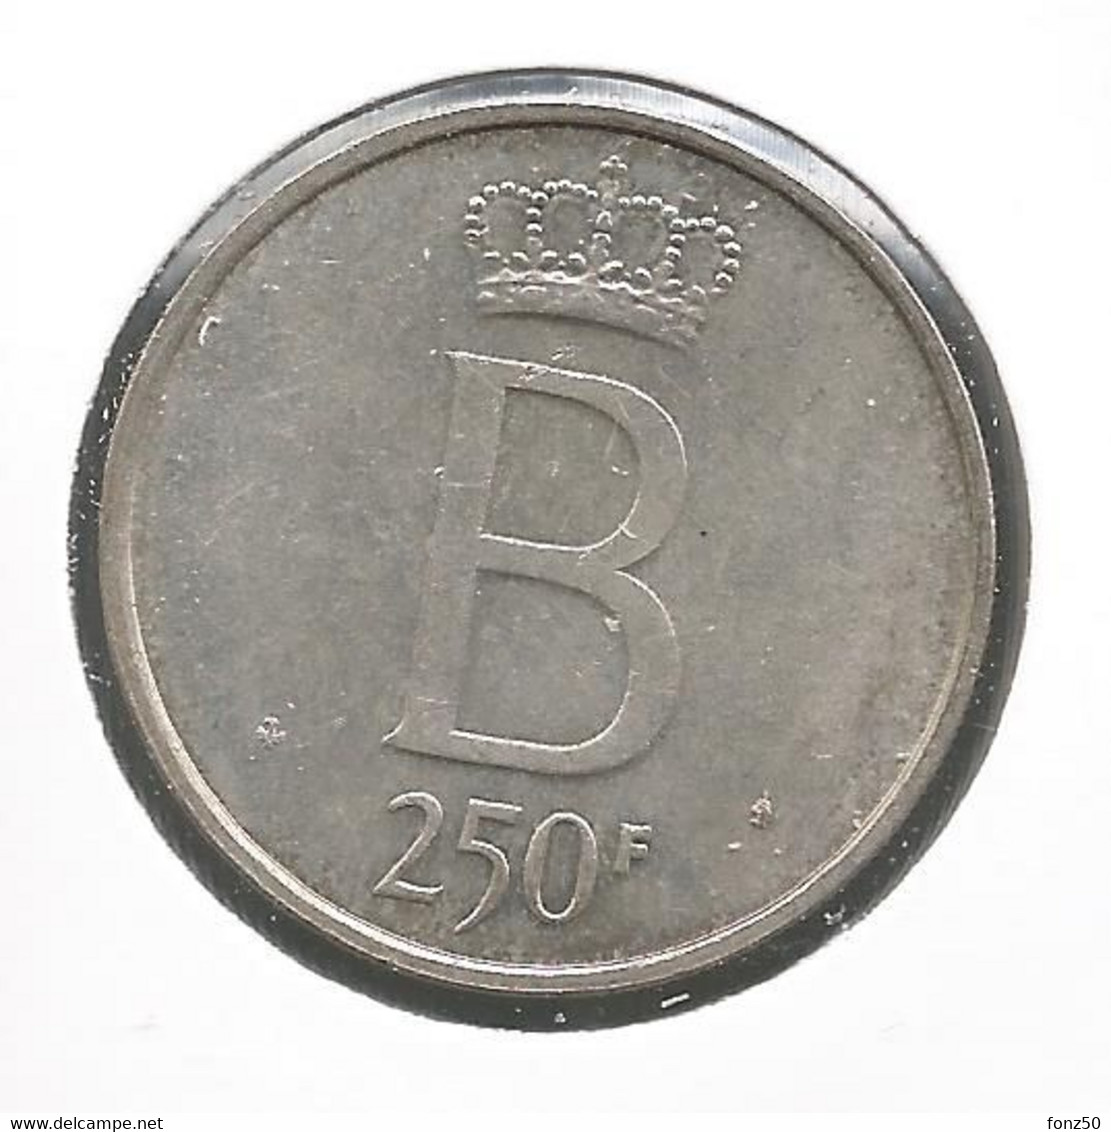 BOUDEWIJN * 250 Frank 1976 Vlaams * Nr 12137 - 250 Francs